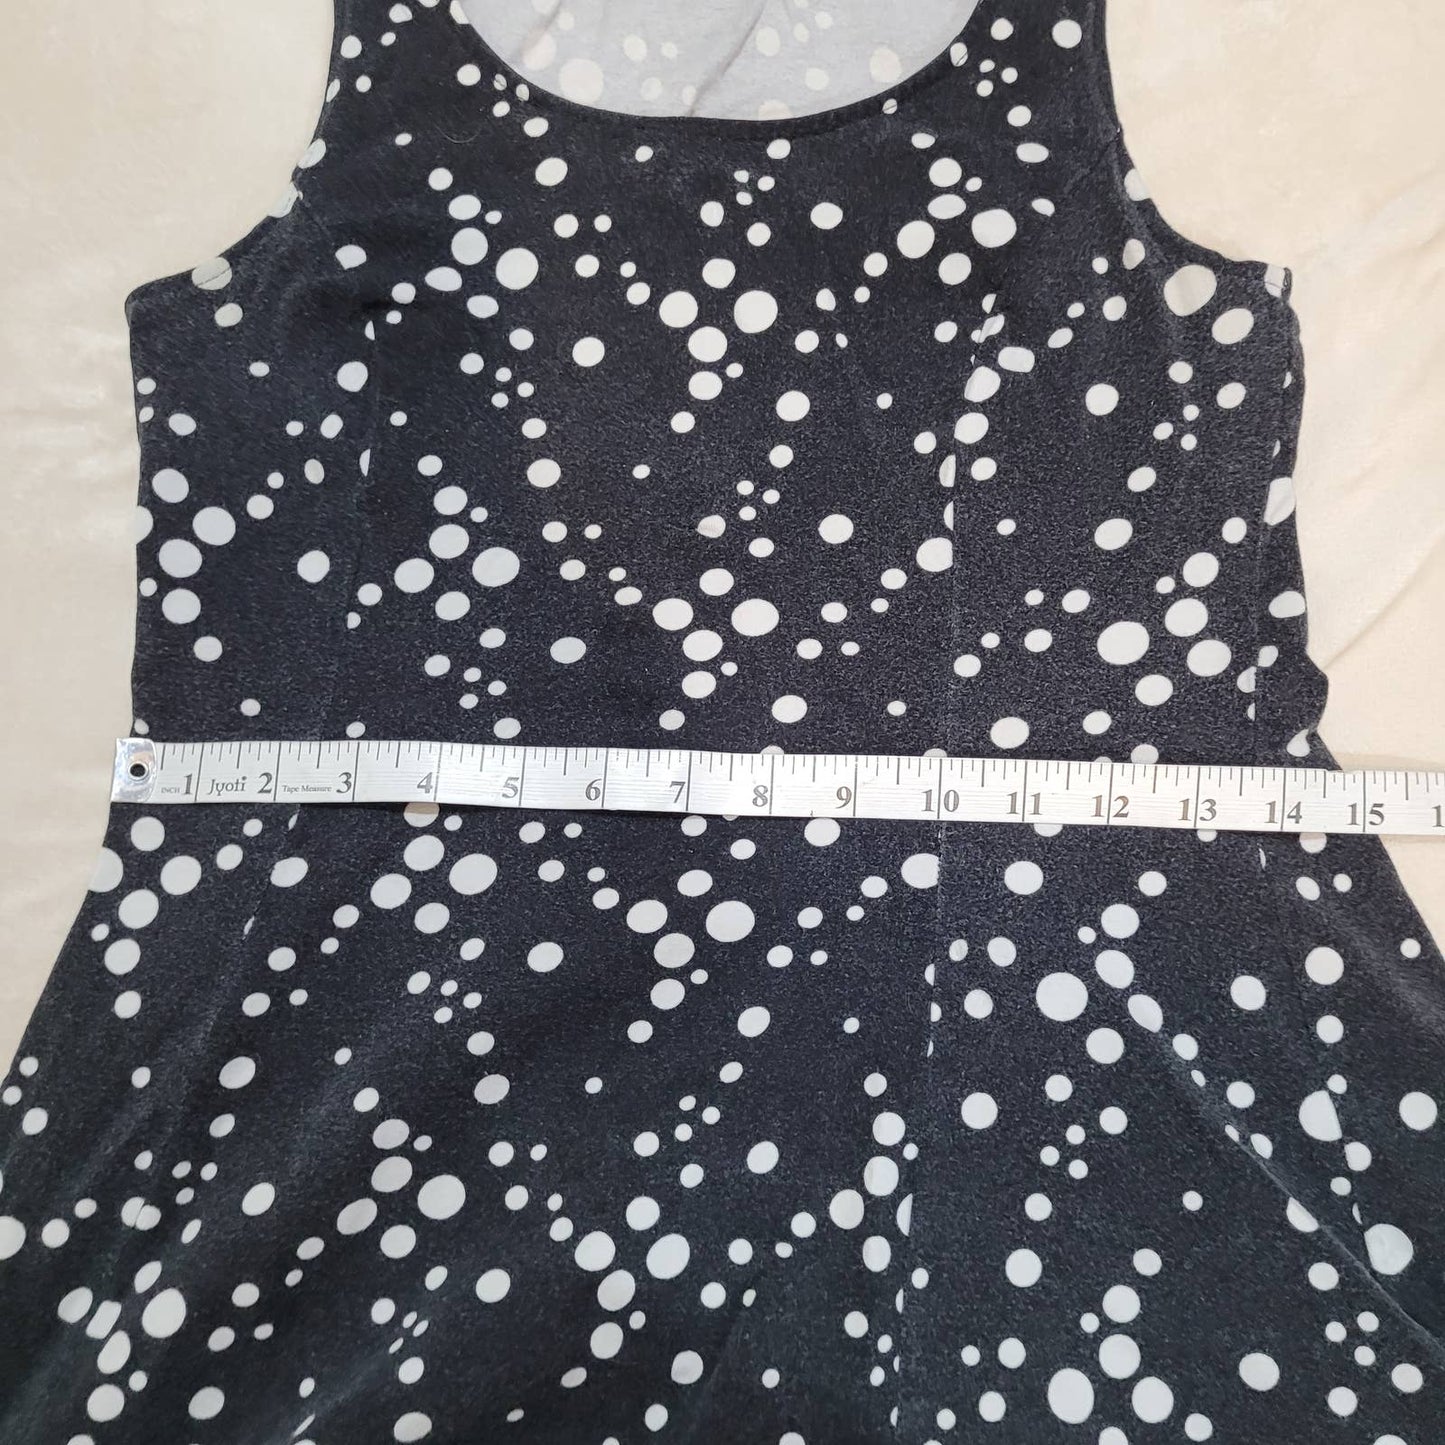 Suzy Shier Black and White Polka Dot Skater Dress - Size MediumMarkita's ClosetSuzy Shier